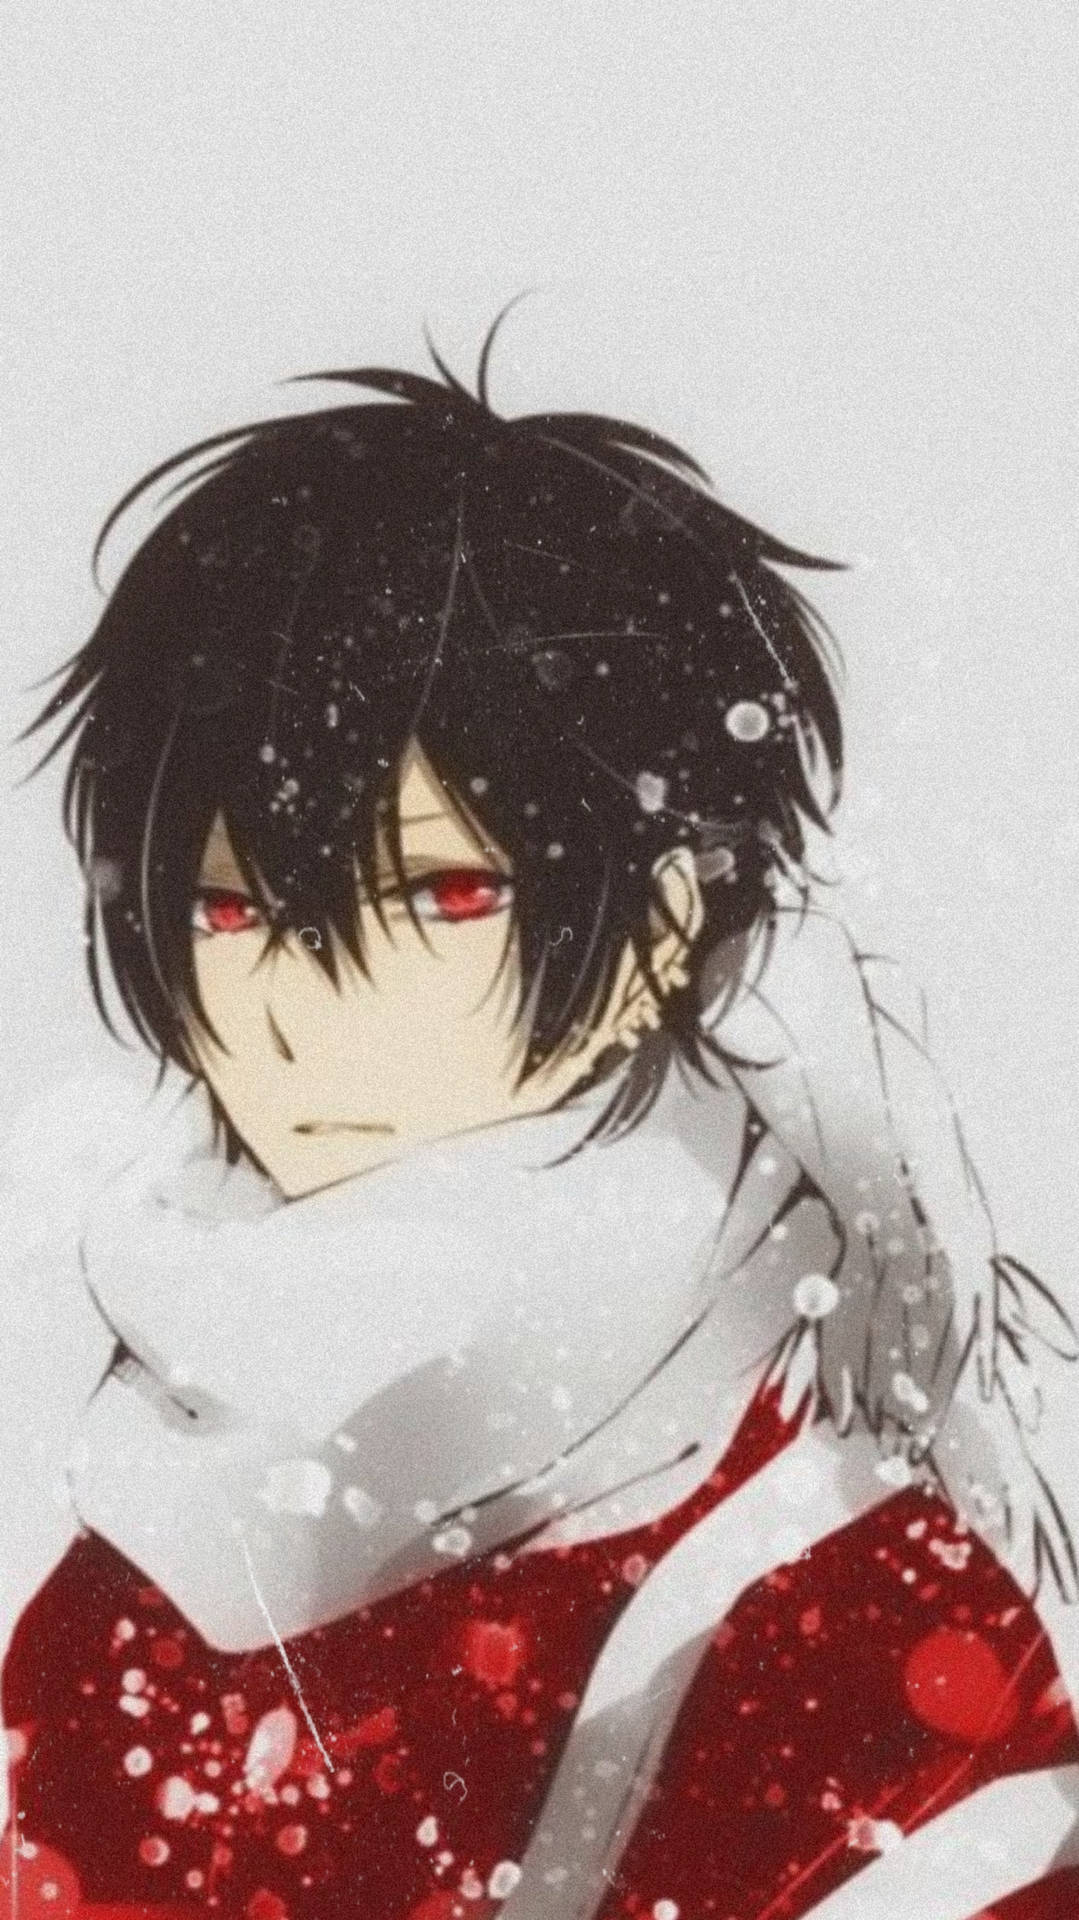 Anime Sad Boy Cartoon On Gloomy Winter